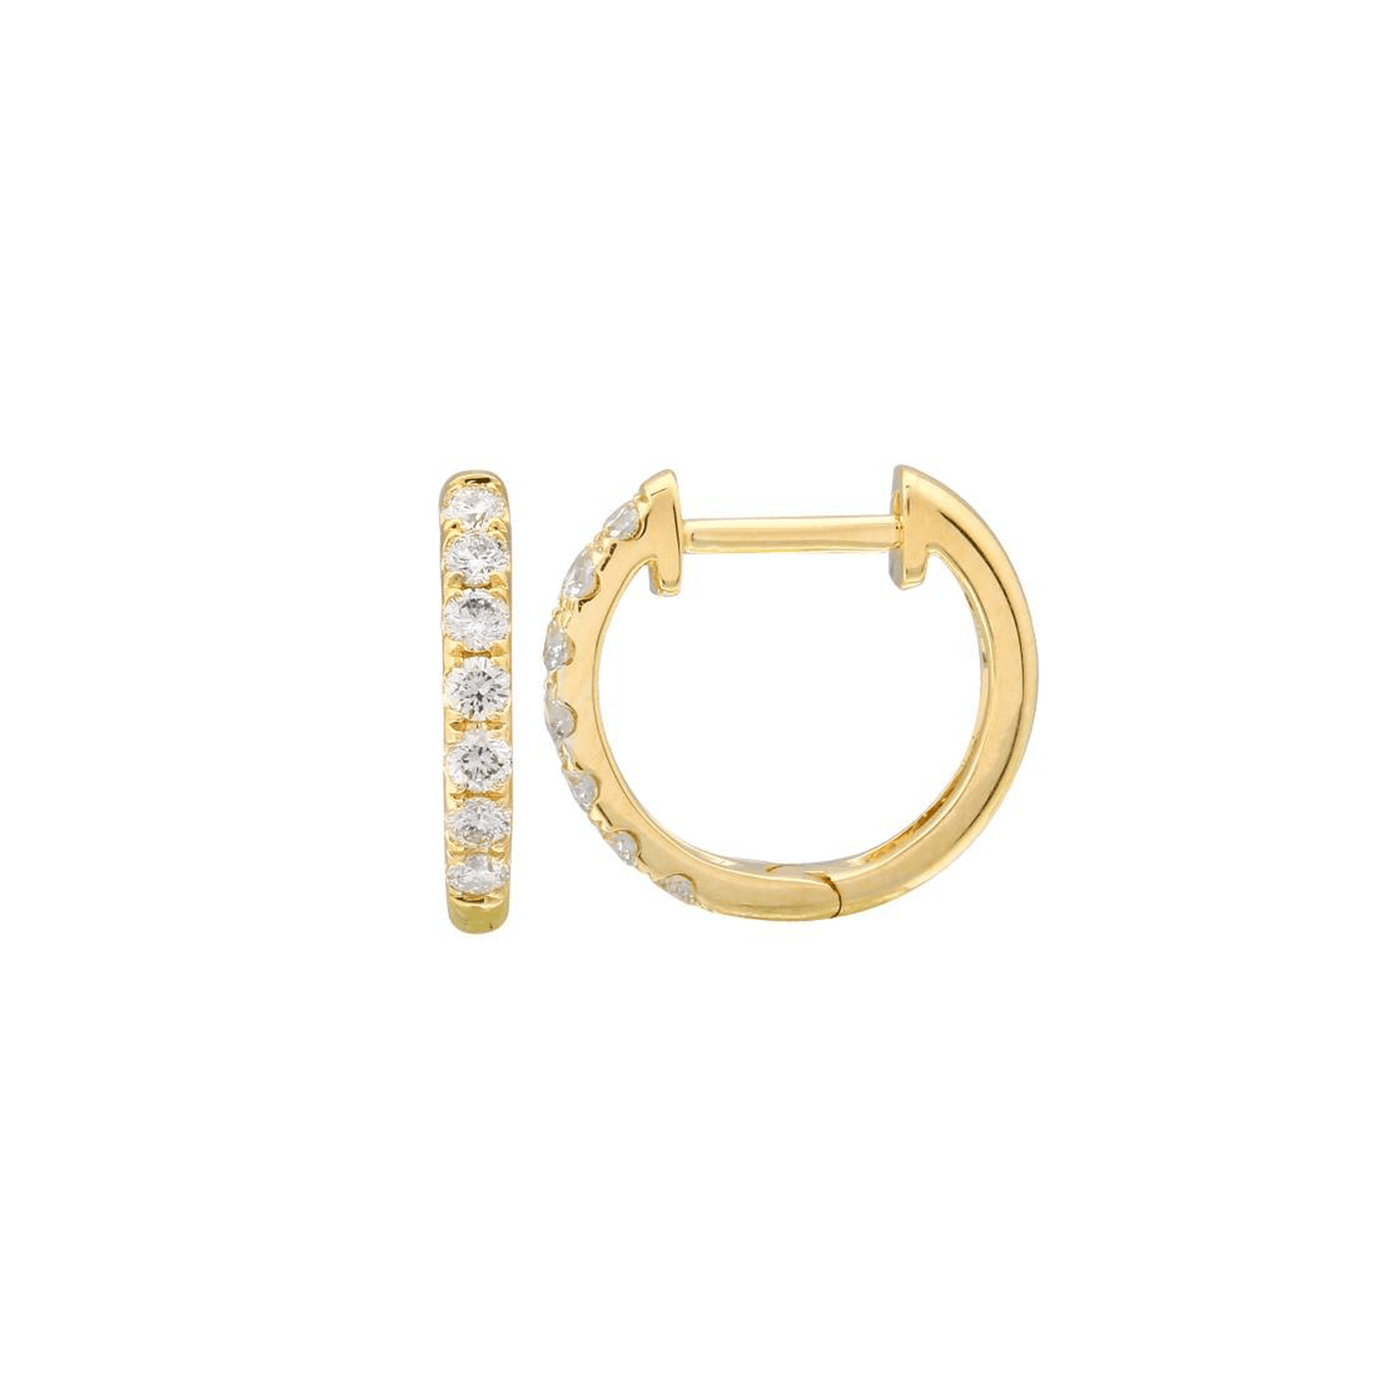 Large Gold Diamond Huggie earrings